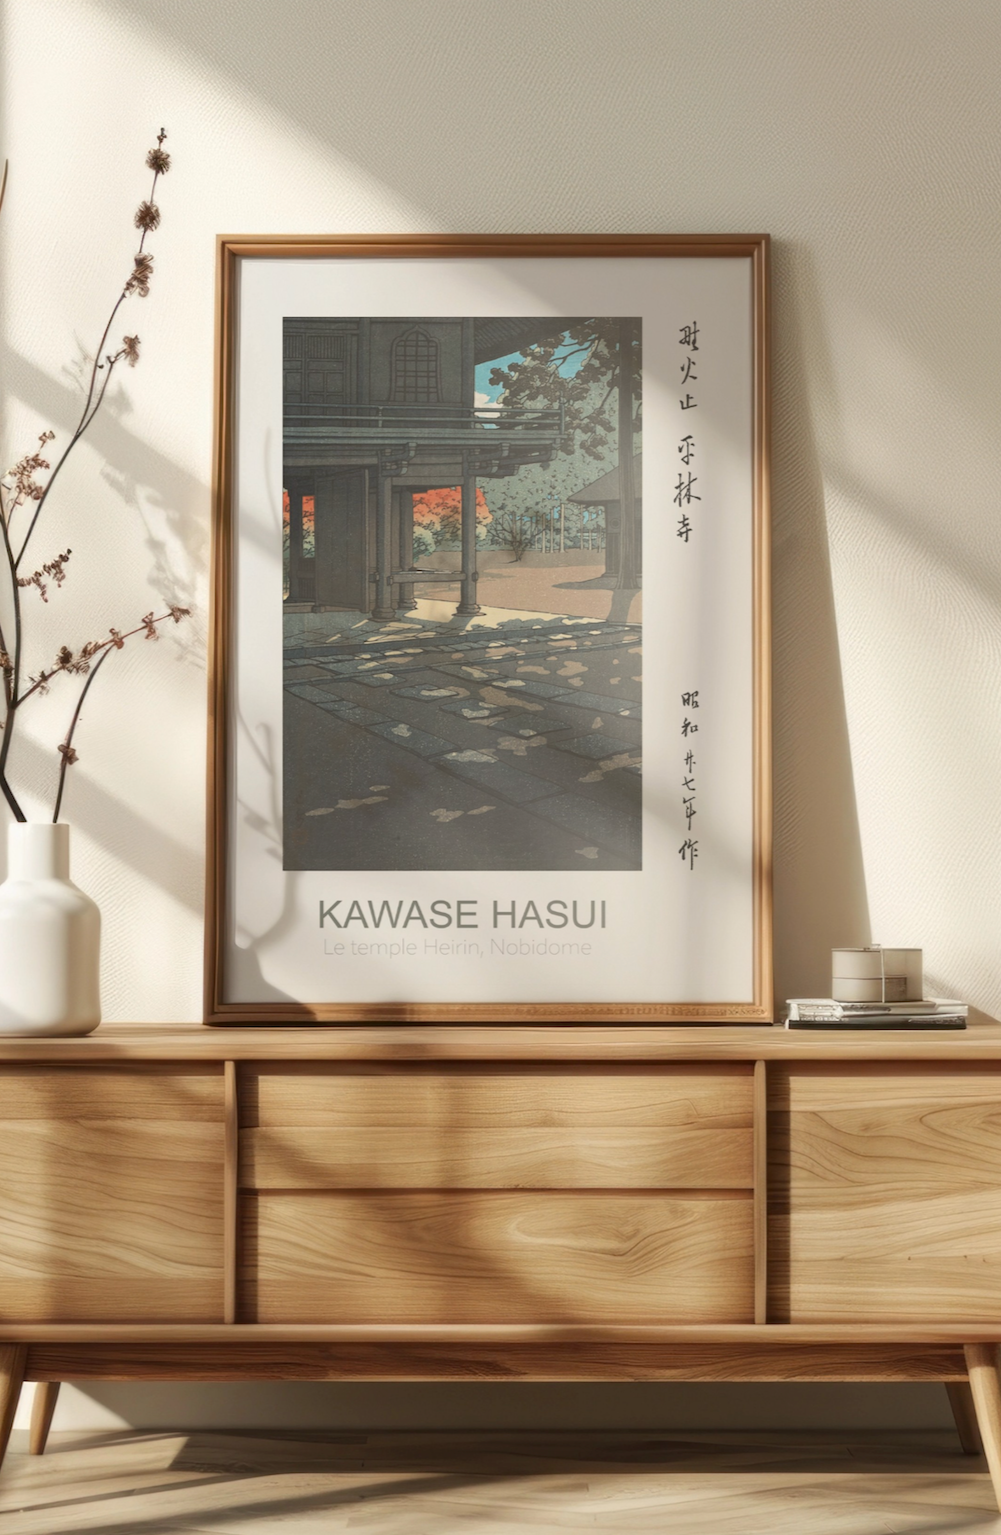 Kawase Hasui - Le temple Heirin, Nobidome